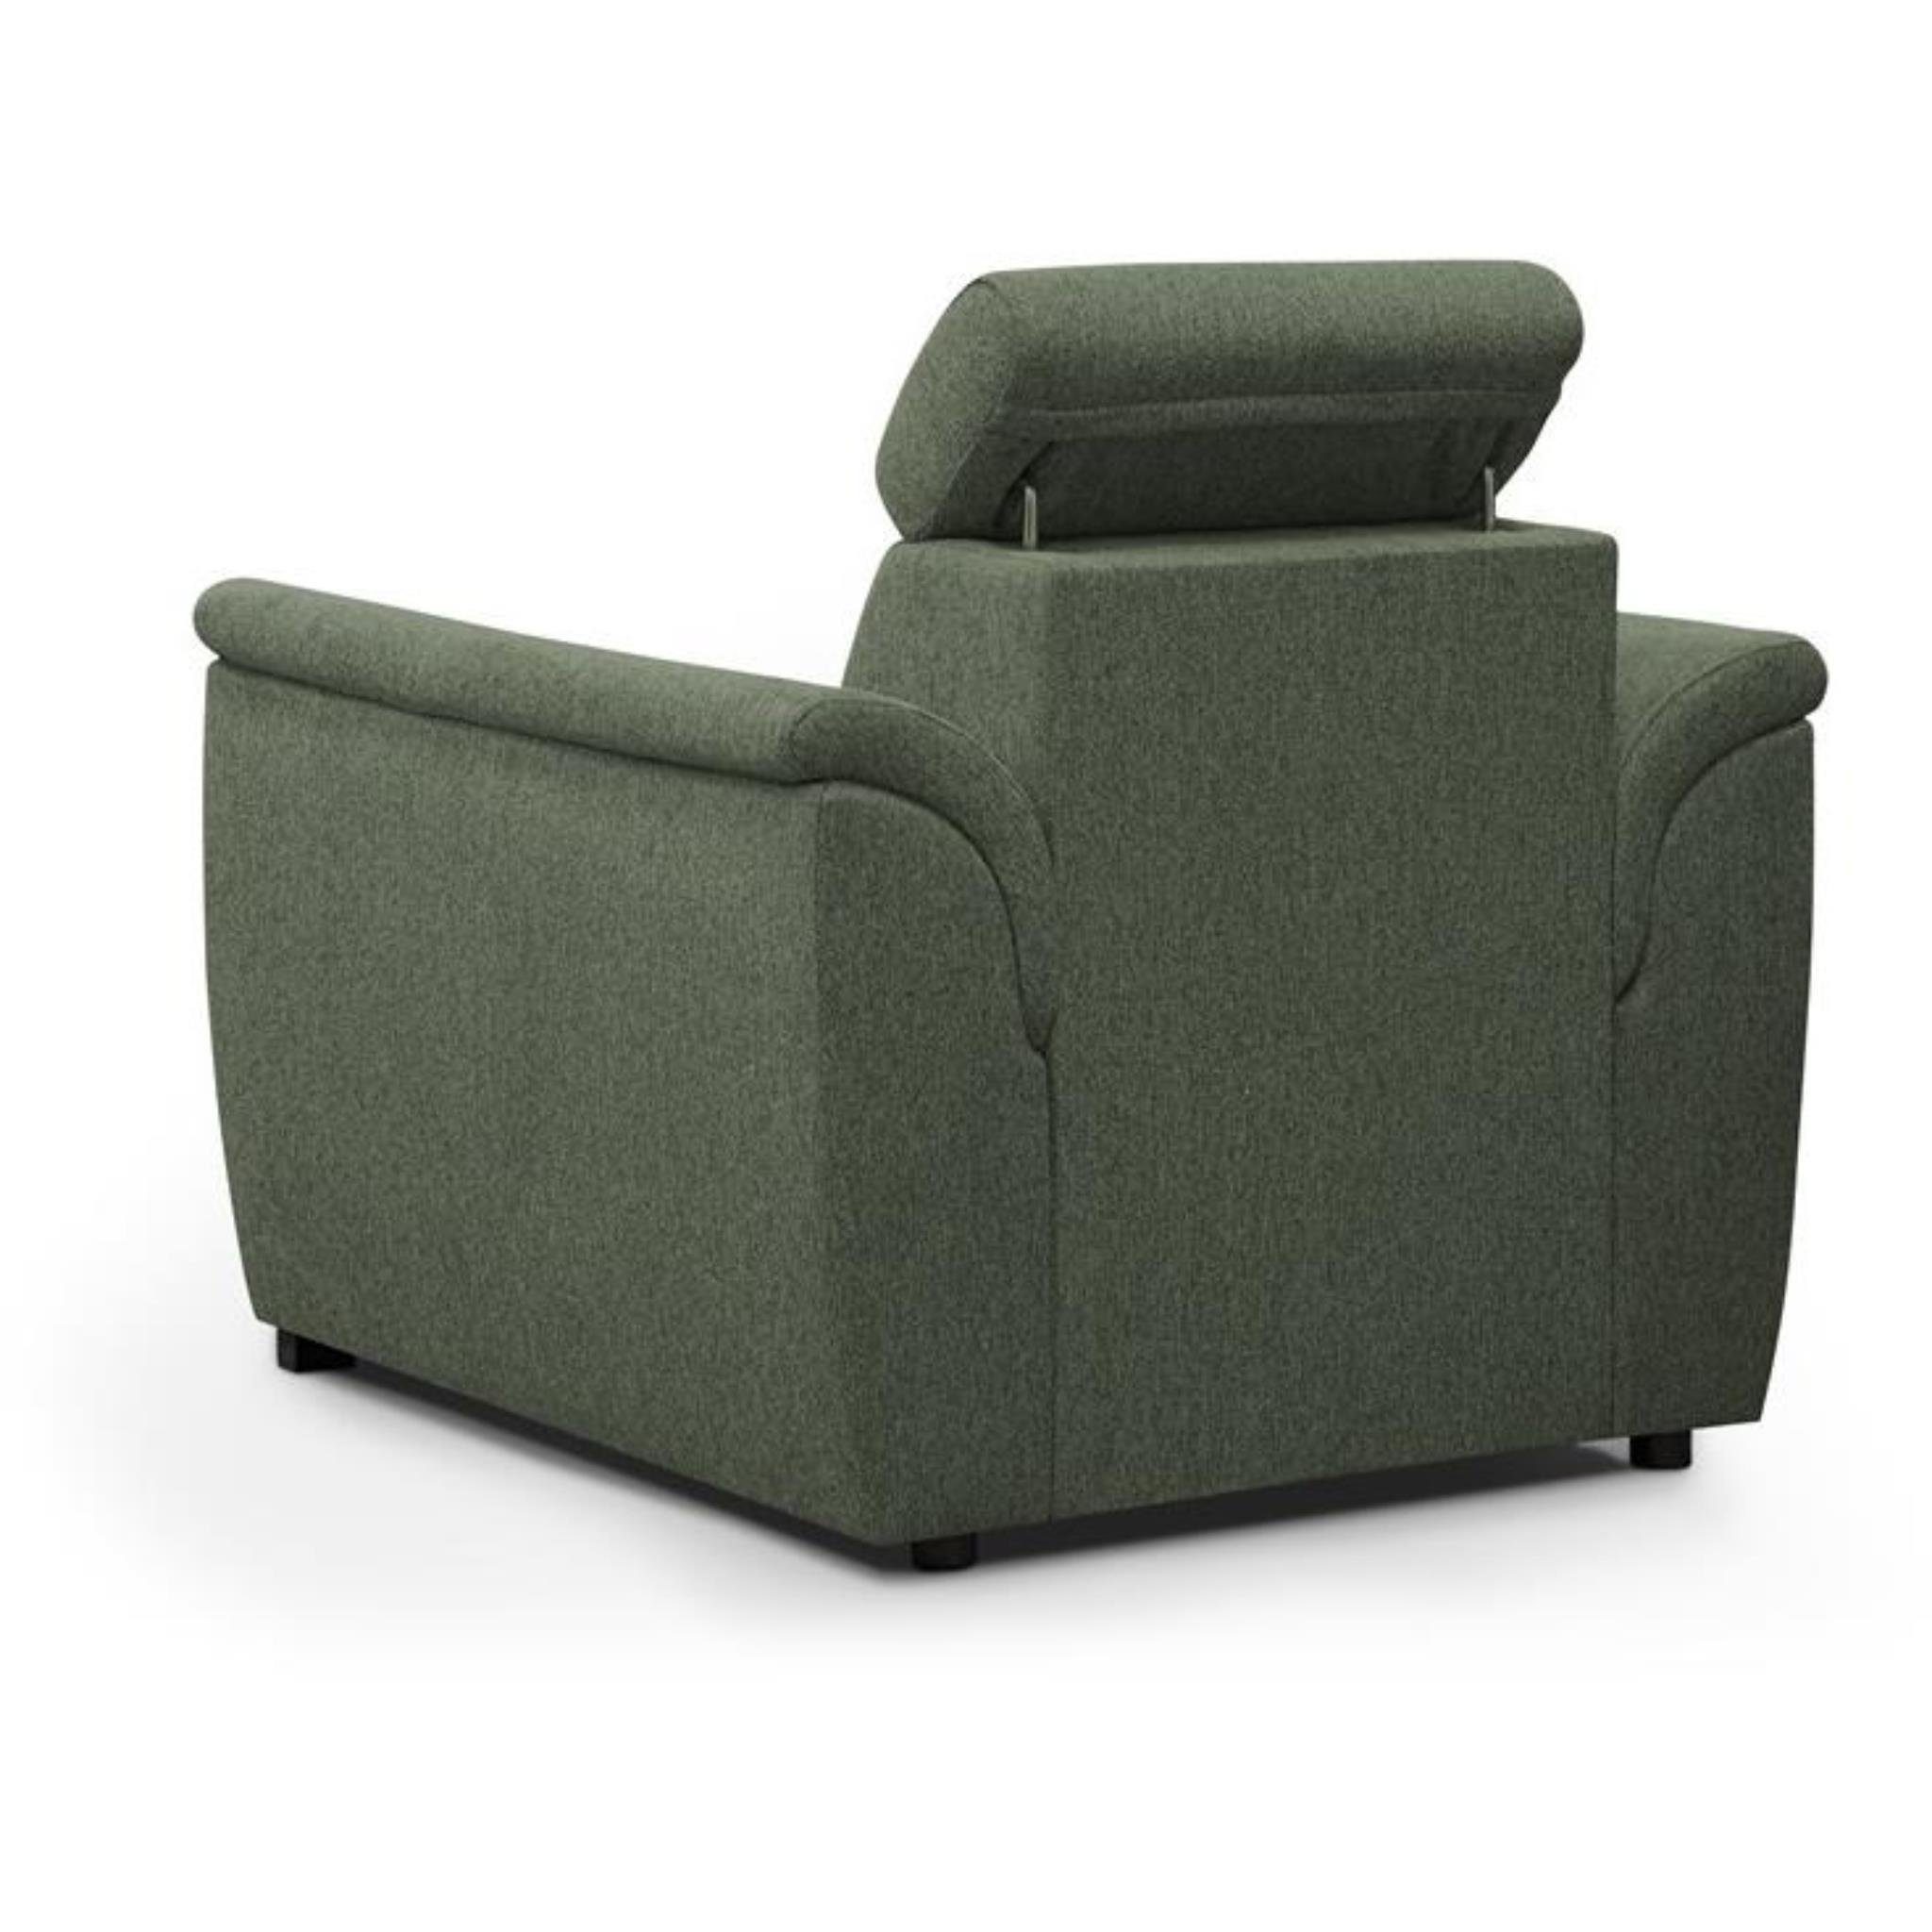 (modern Polstersessel Madera Beautysofa 06) (matana Wellenfedern), mit stilvoll Sessel Lounge Relaxsessel verstellbare Grün mit Kopfstütze